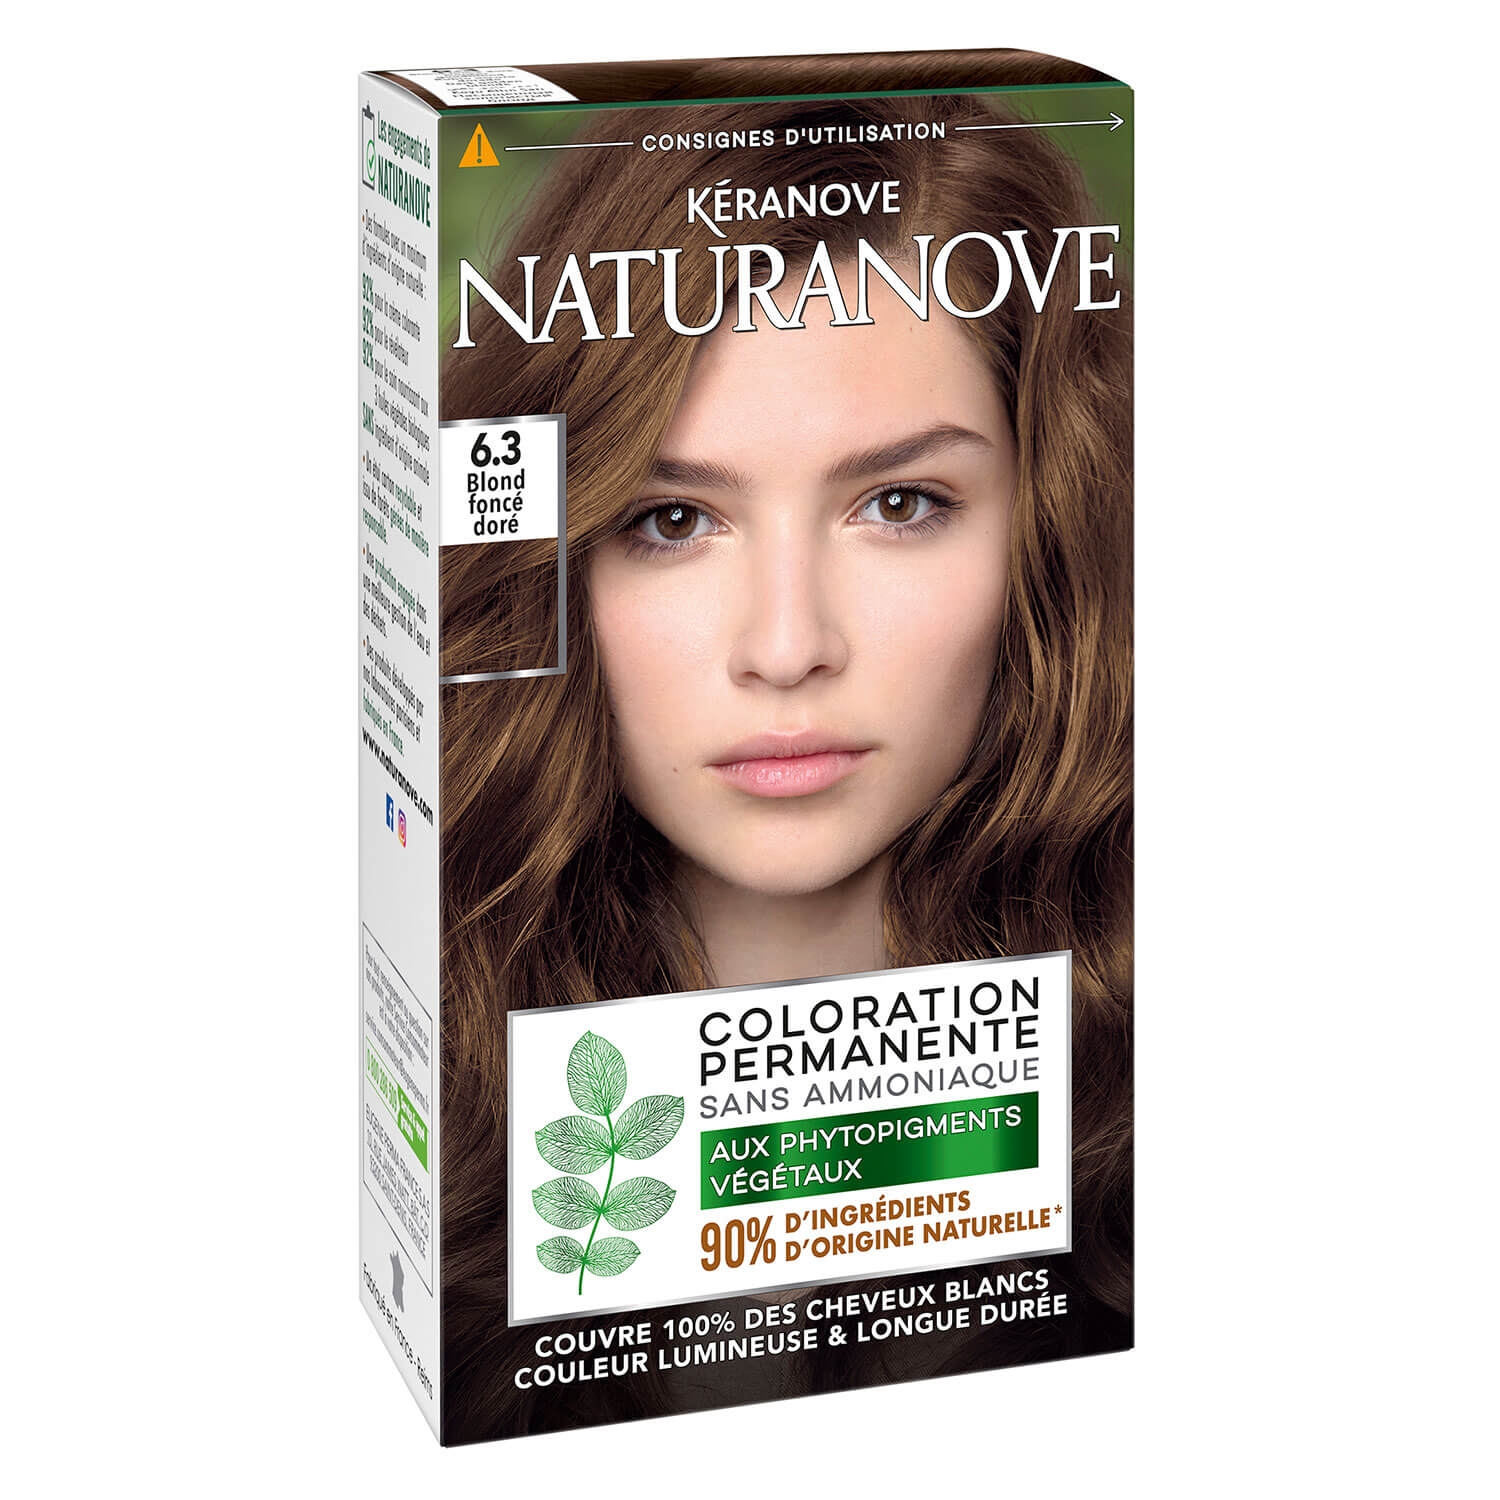 Product image from Naturanove - Dauerhafte Haarfarbe Dunkelgoldene Blondine 6.3